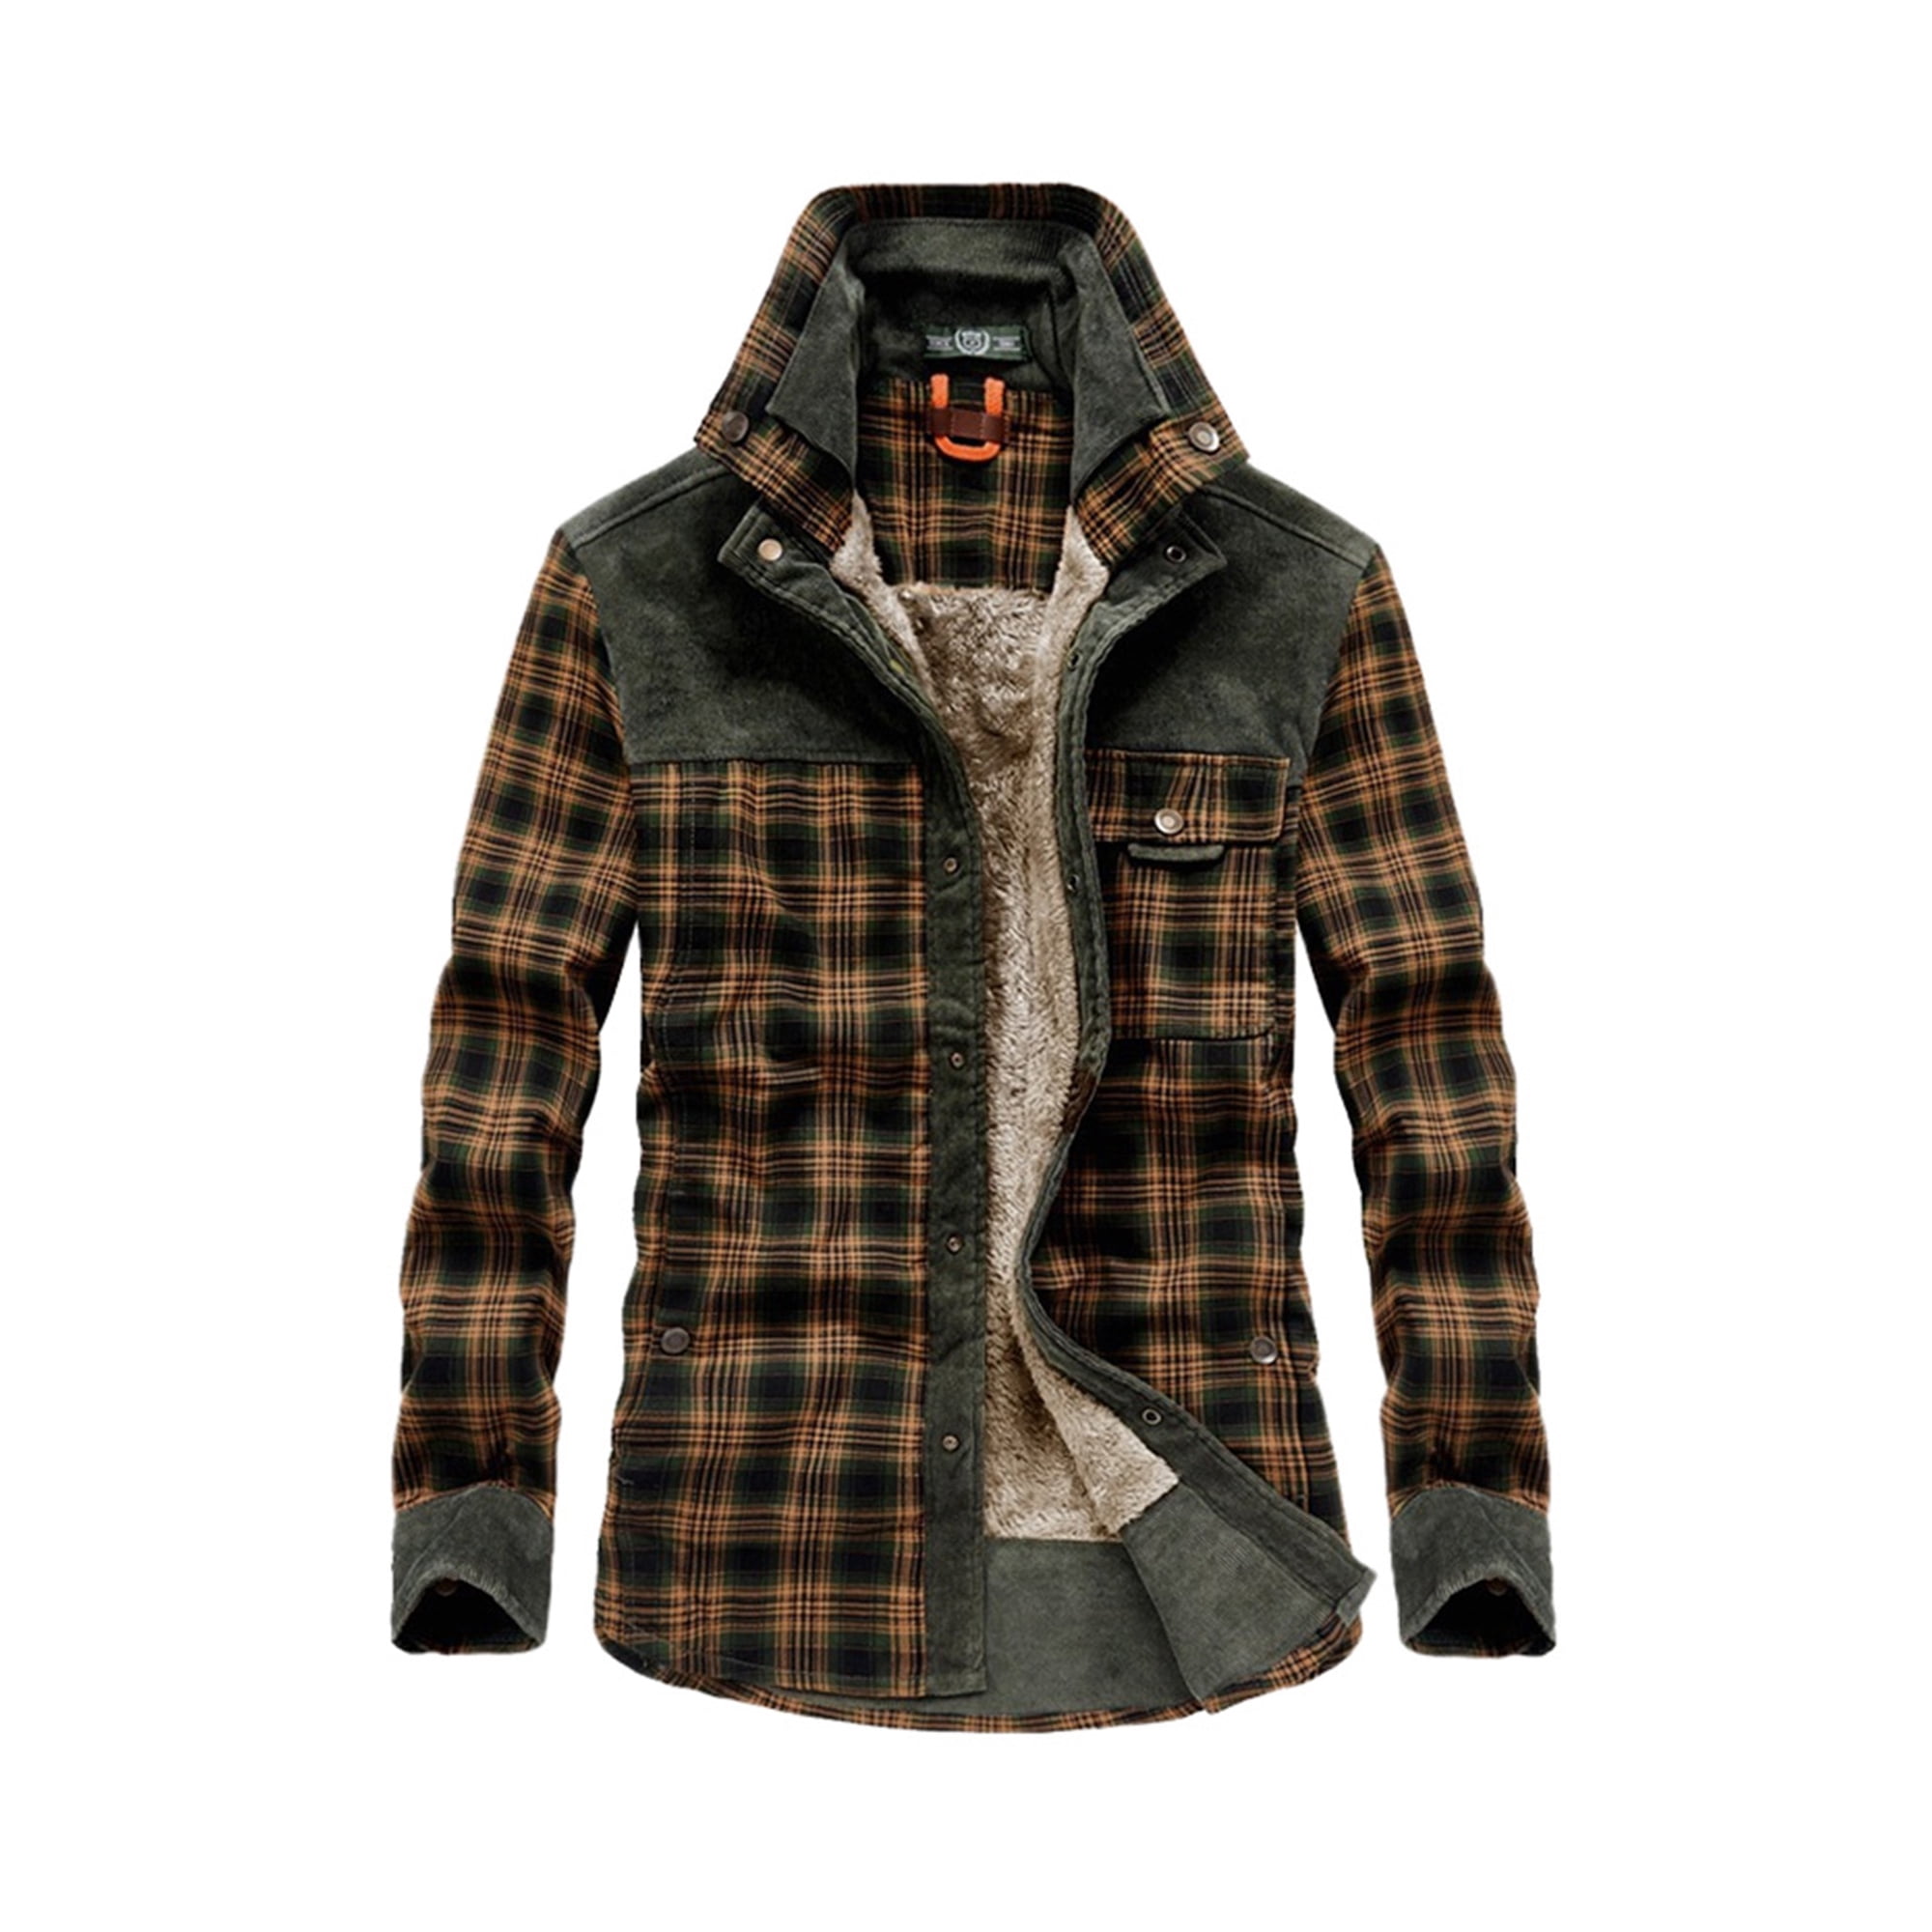 Lumento Men Outwear Lapel Neck Winter Warm Jacket Check Print Coat